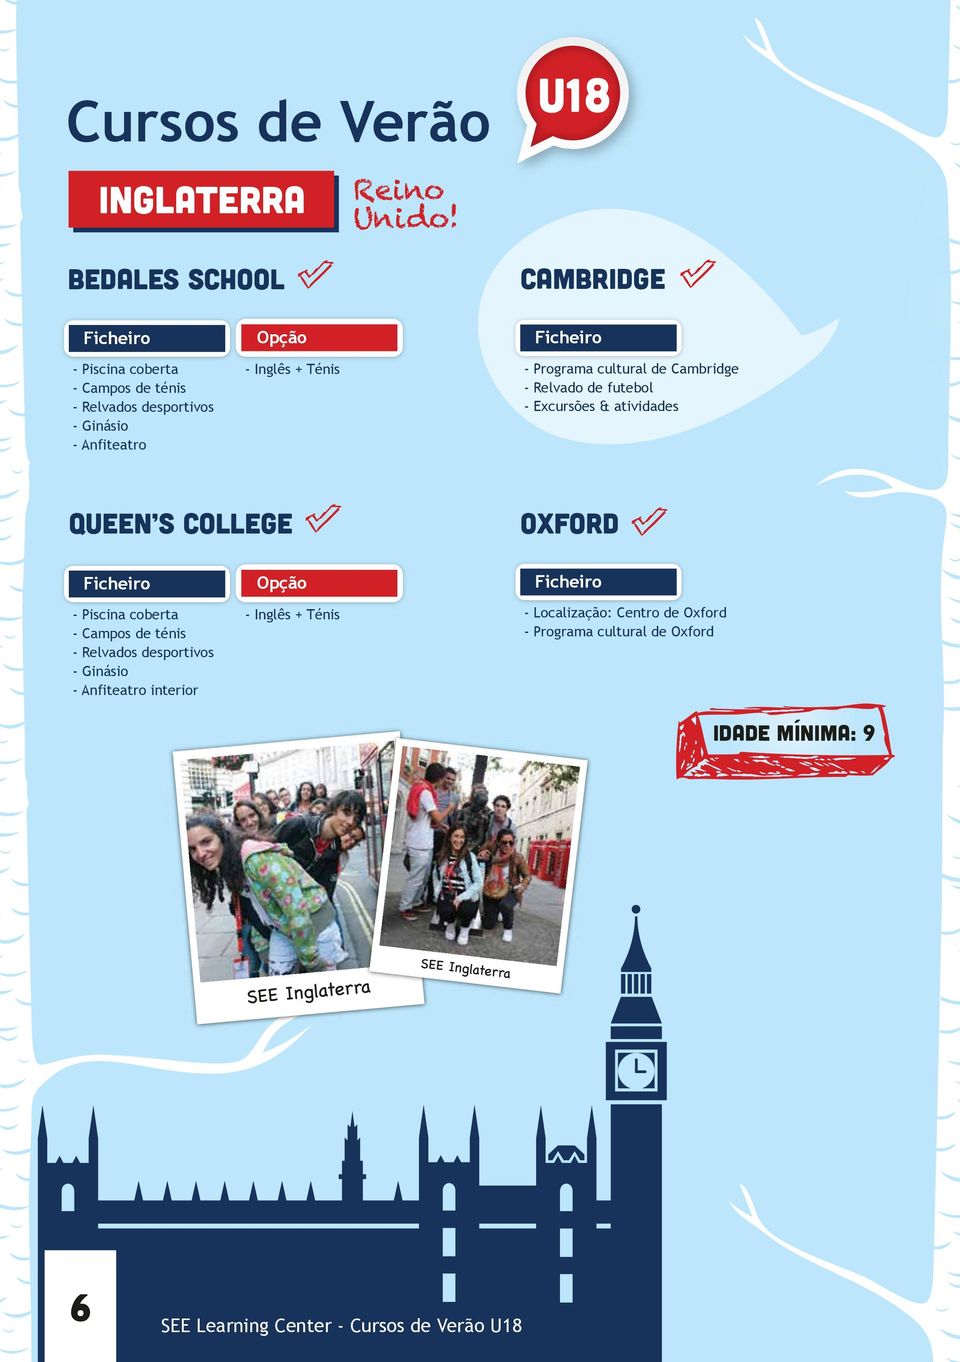 Programa cultural de Cambridge - Relvado de futebol - Excursões & atividades Queen s College Oxford - Piscina coberta - Campos